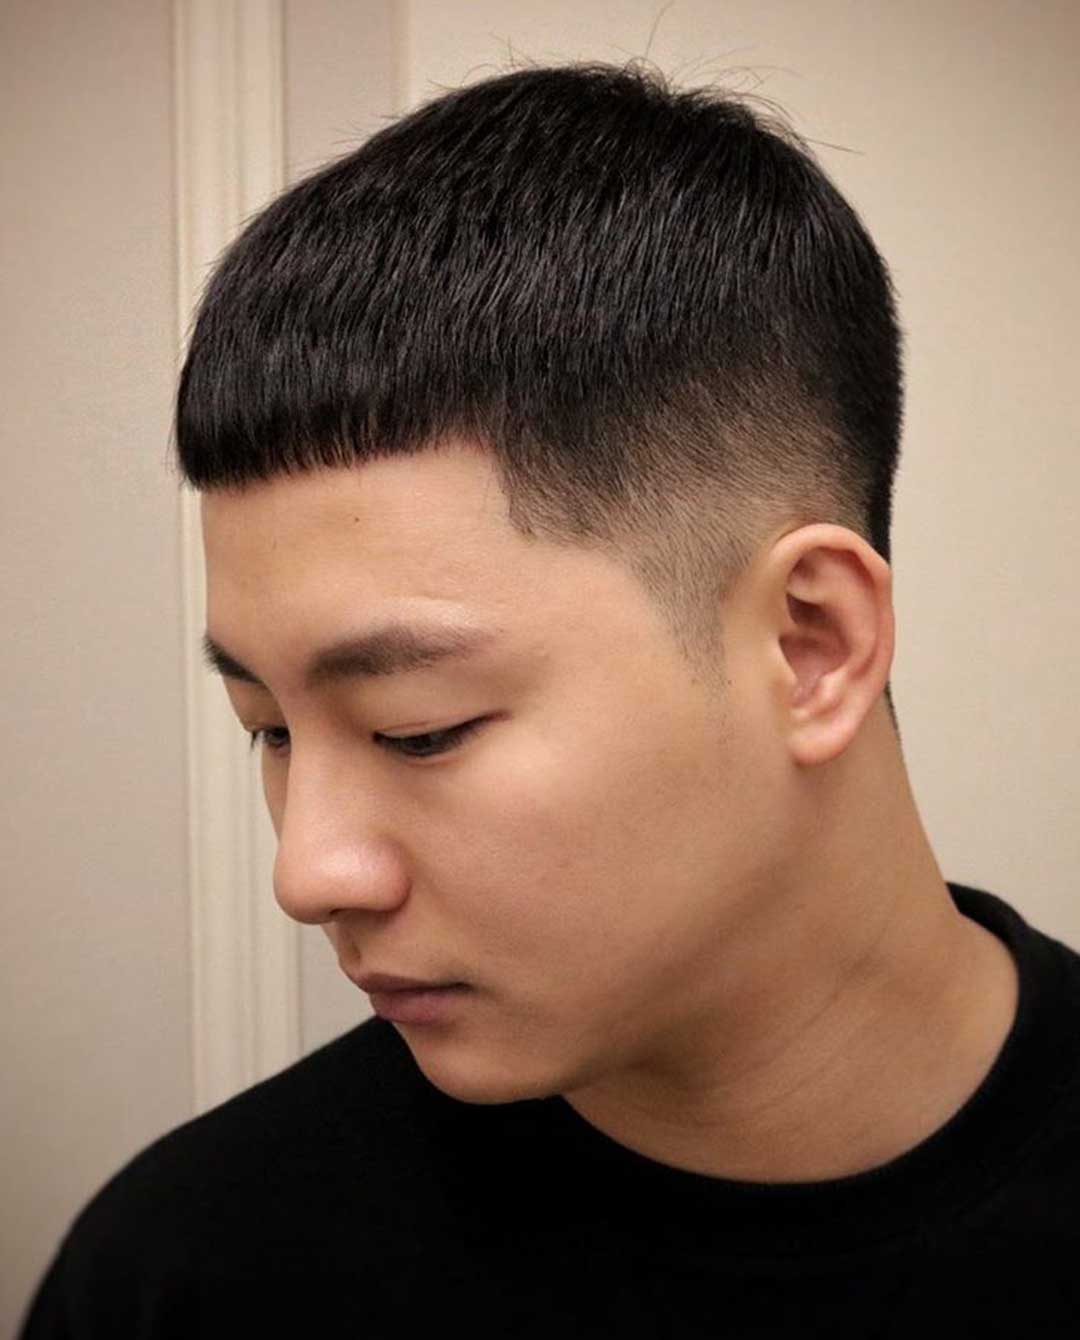 20+ Best Korean Men Haircut & Hairstyle Ideas   Men's Hairstyle Tips